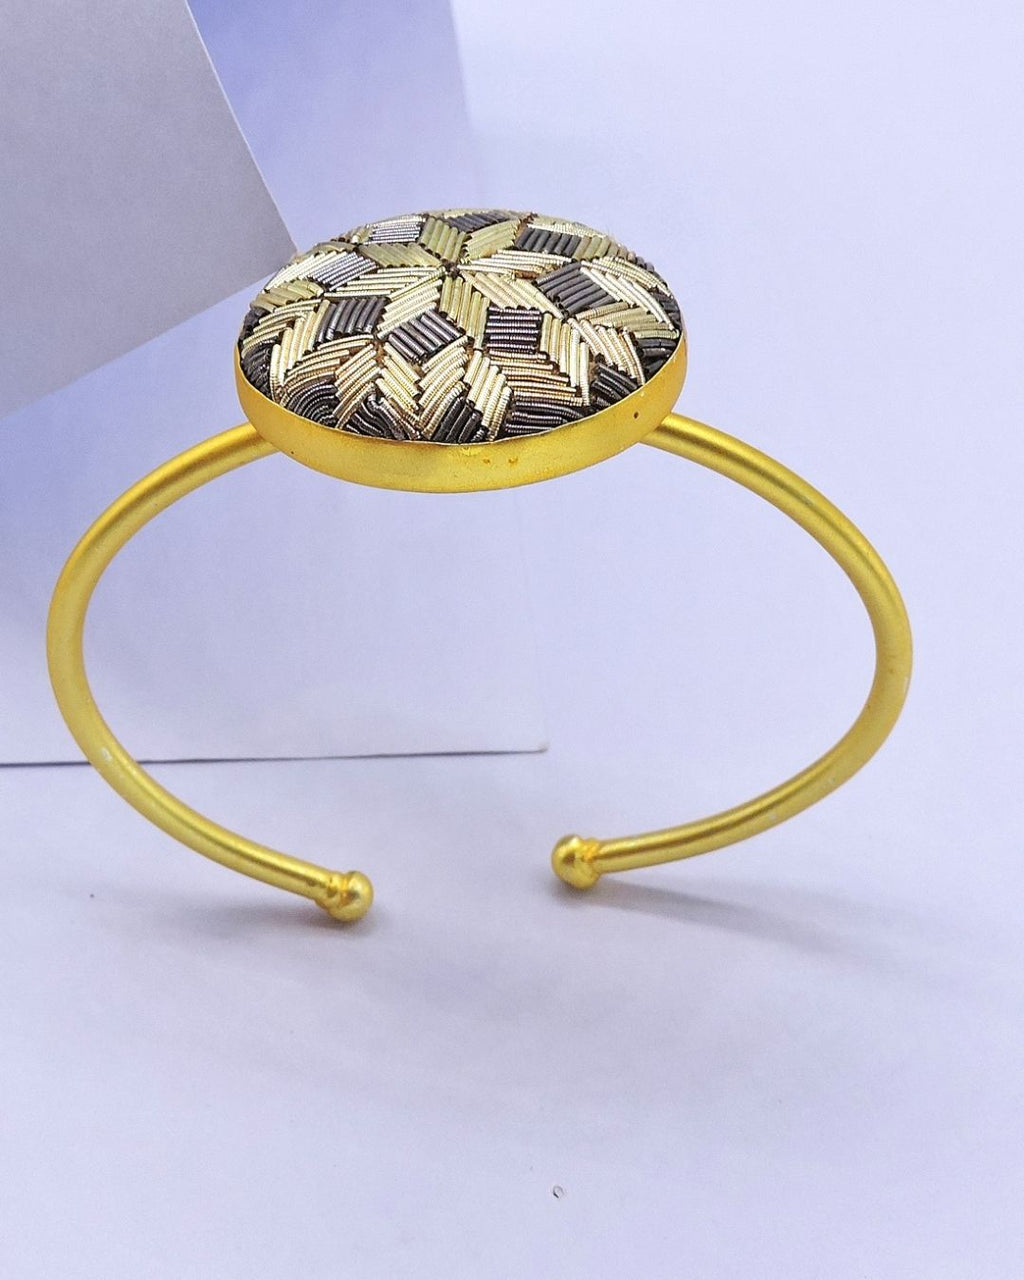 Zardosi Classic Cuff - Bracelets & Cuffs - Handcrafted Jewellery - Made in India - Dubai Jewellery, Fashion & Lifestyle - Dori